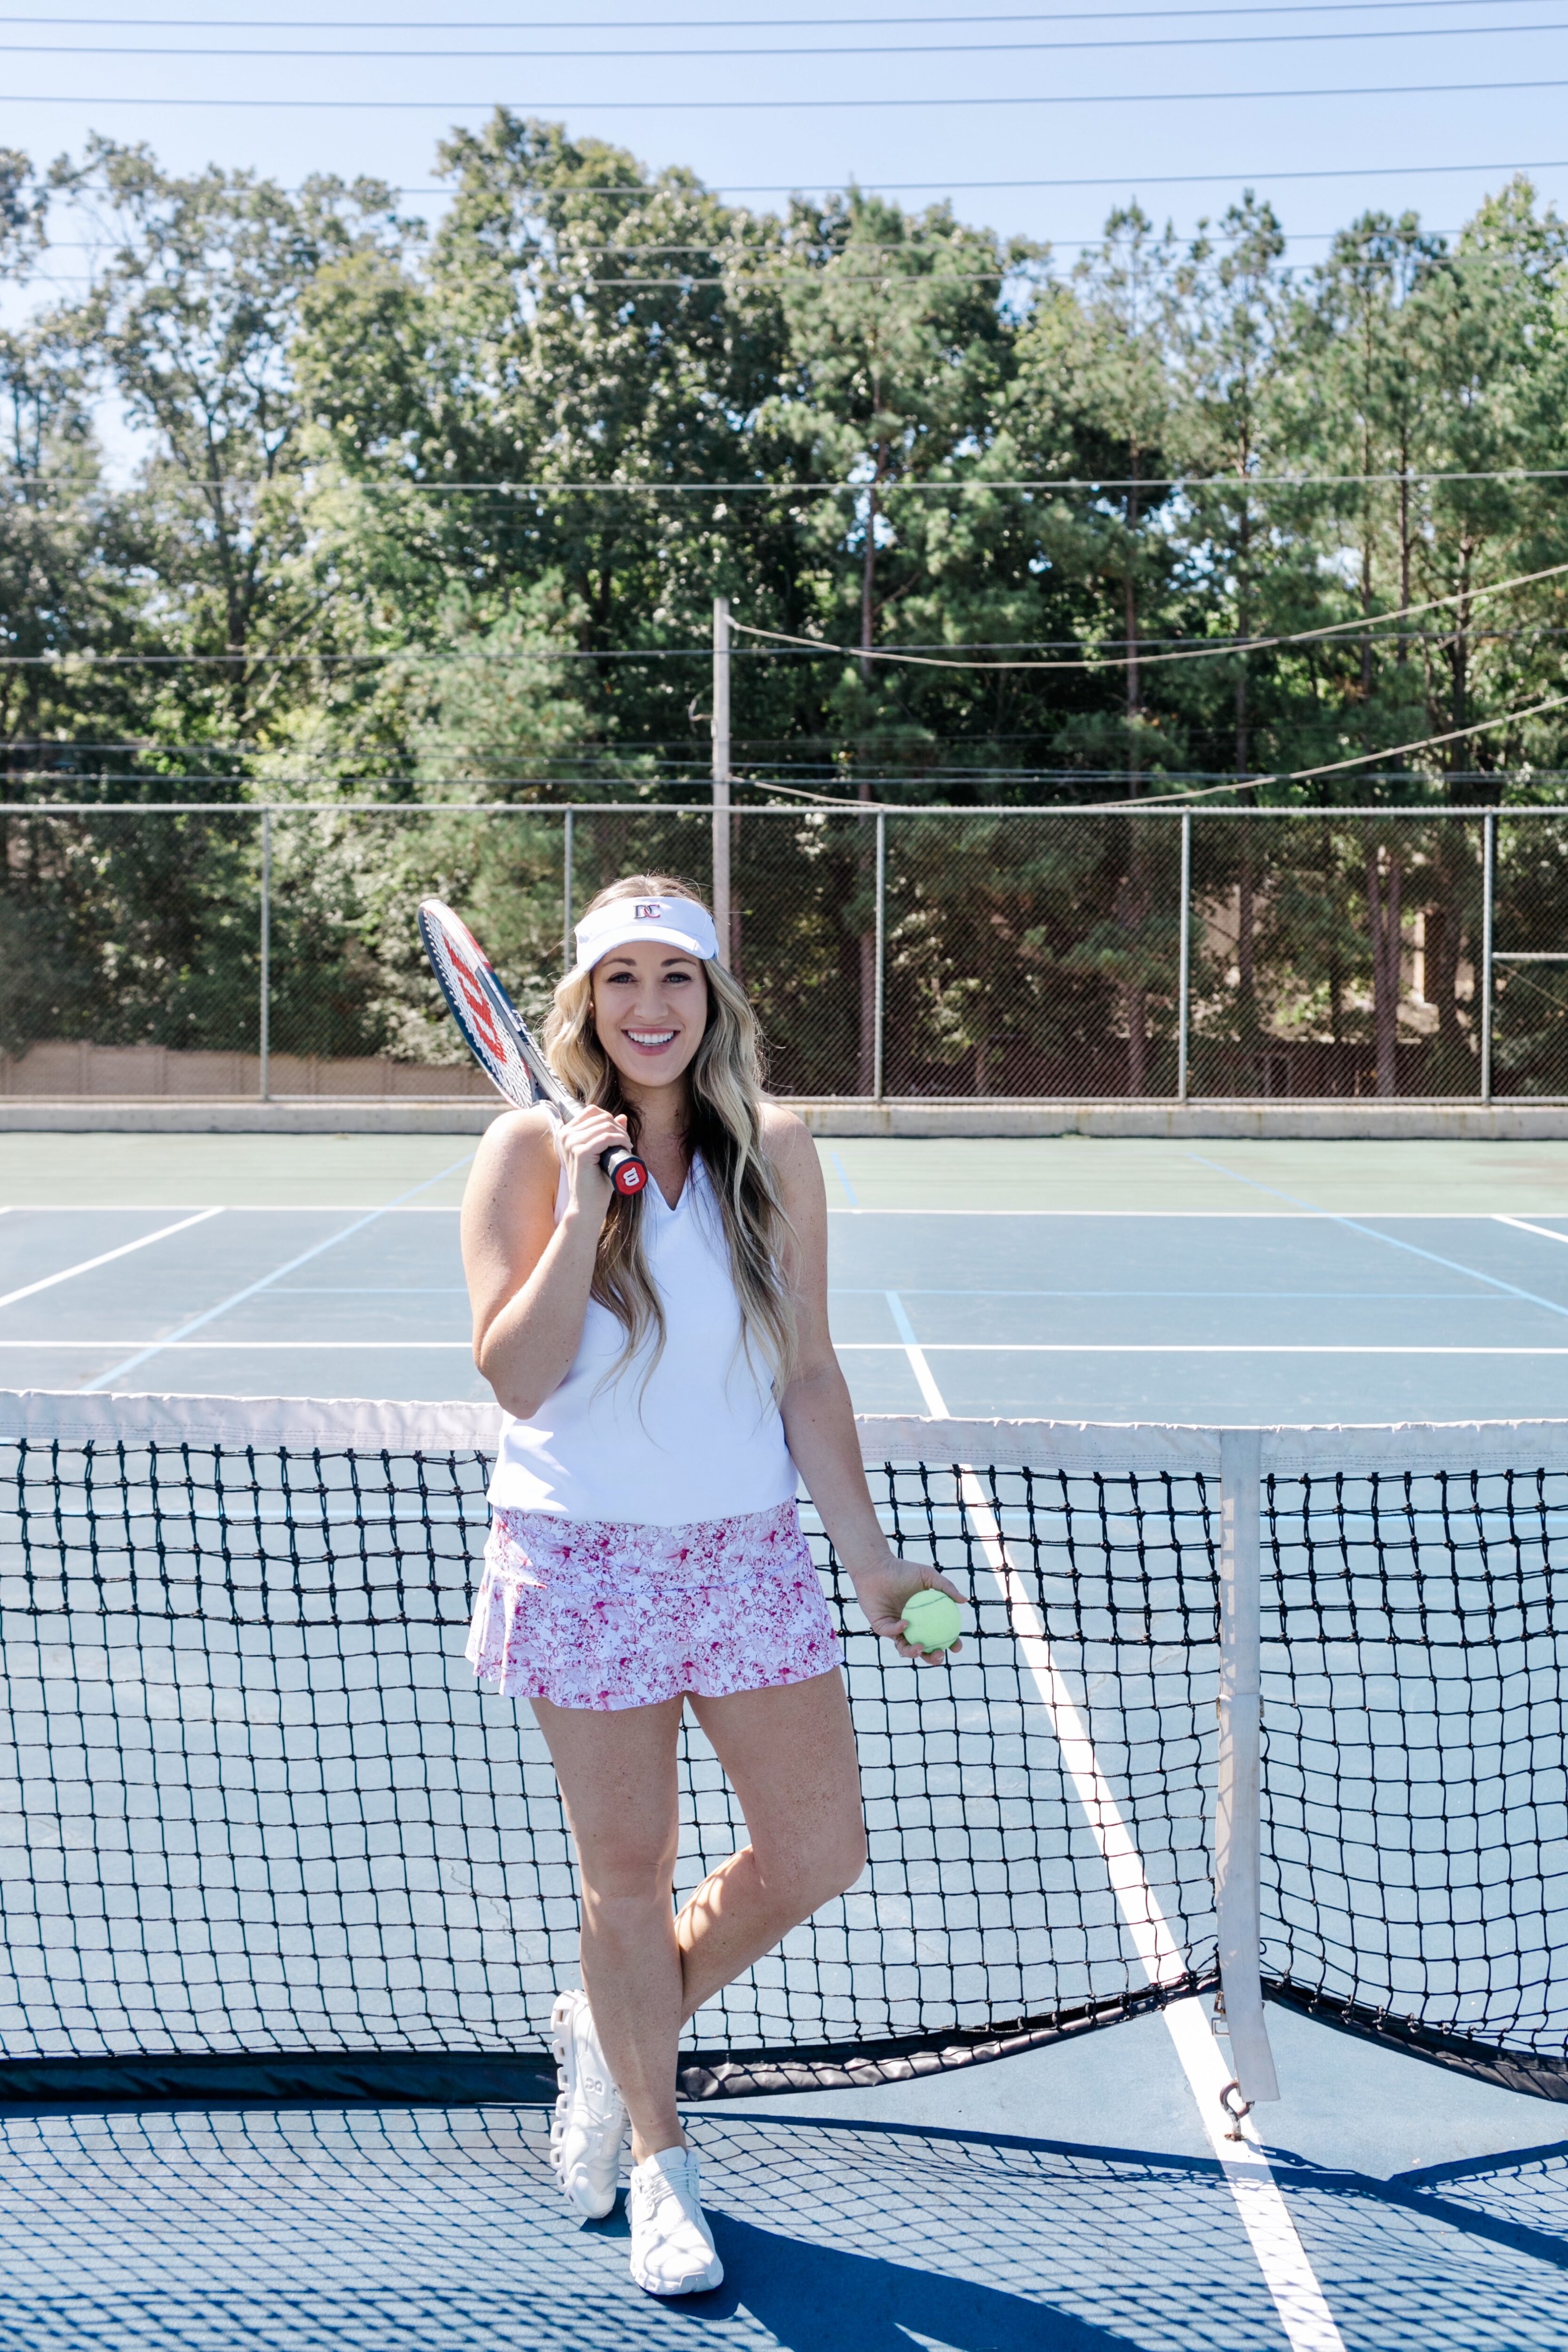 tennis outfits - tennis skirt - tennis polo - workout outfit - tennis skort